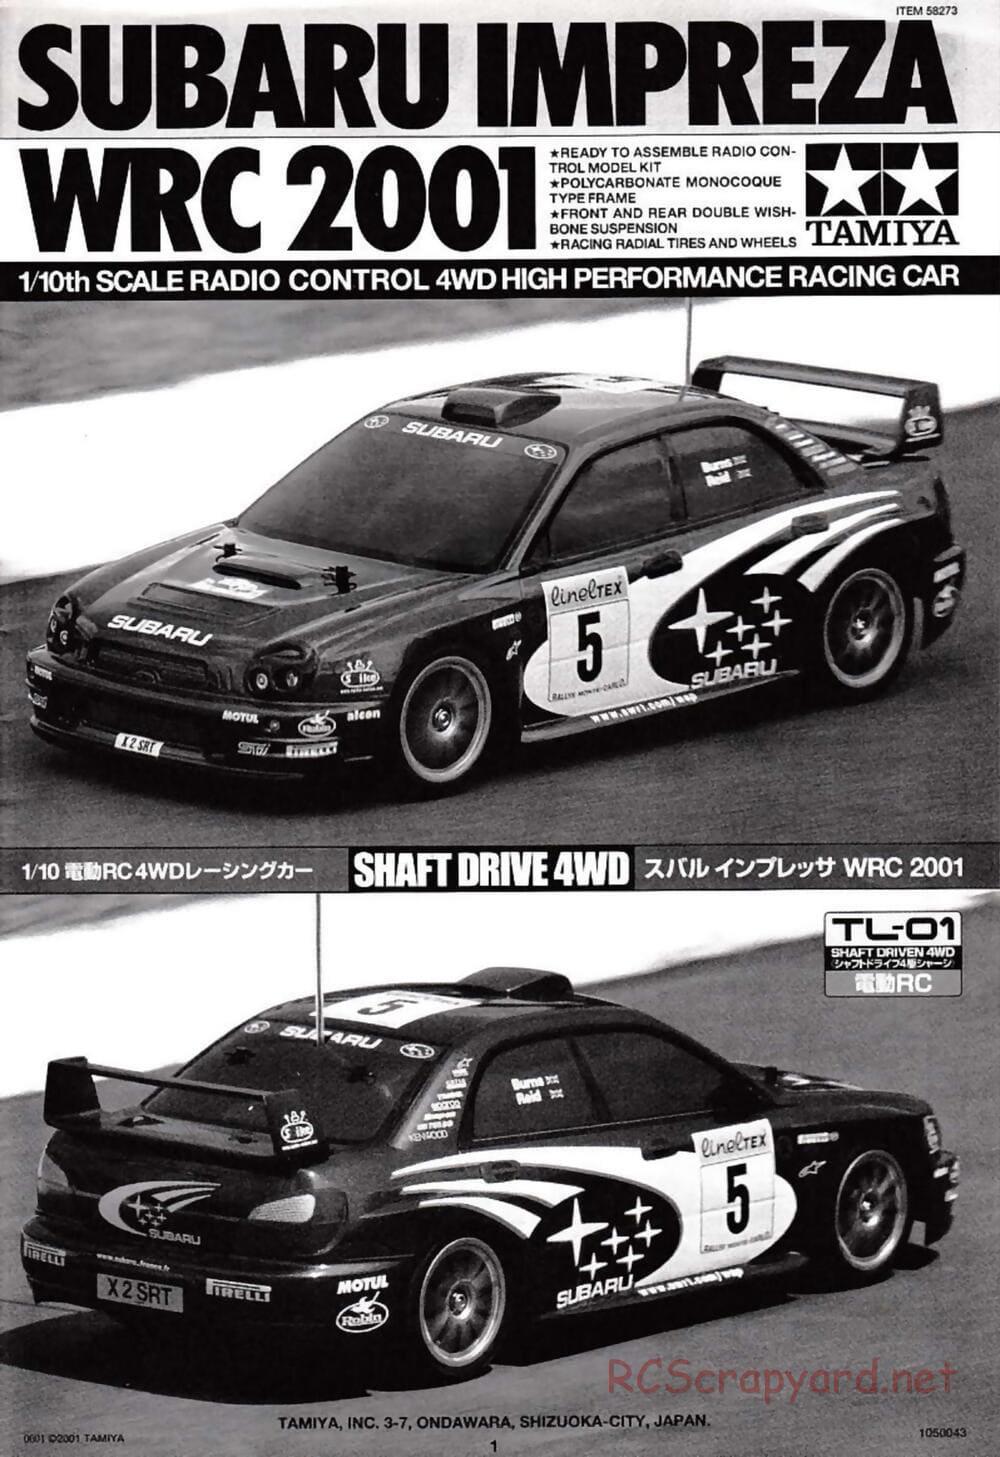 Tamiya - Subaru Impreza WRC 2001 - TL-01 Chassis - Manual - Page 1